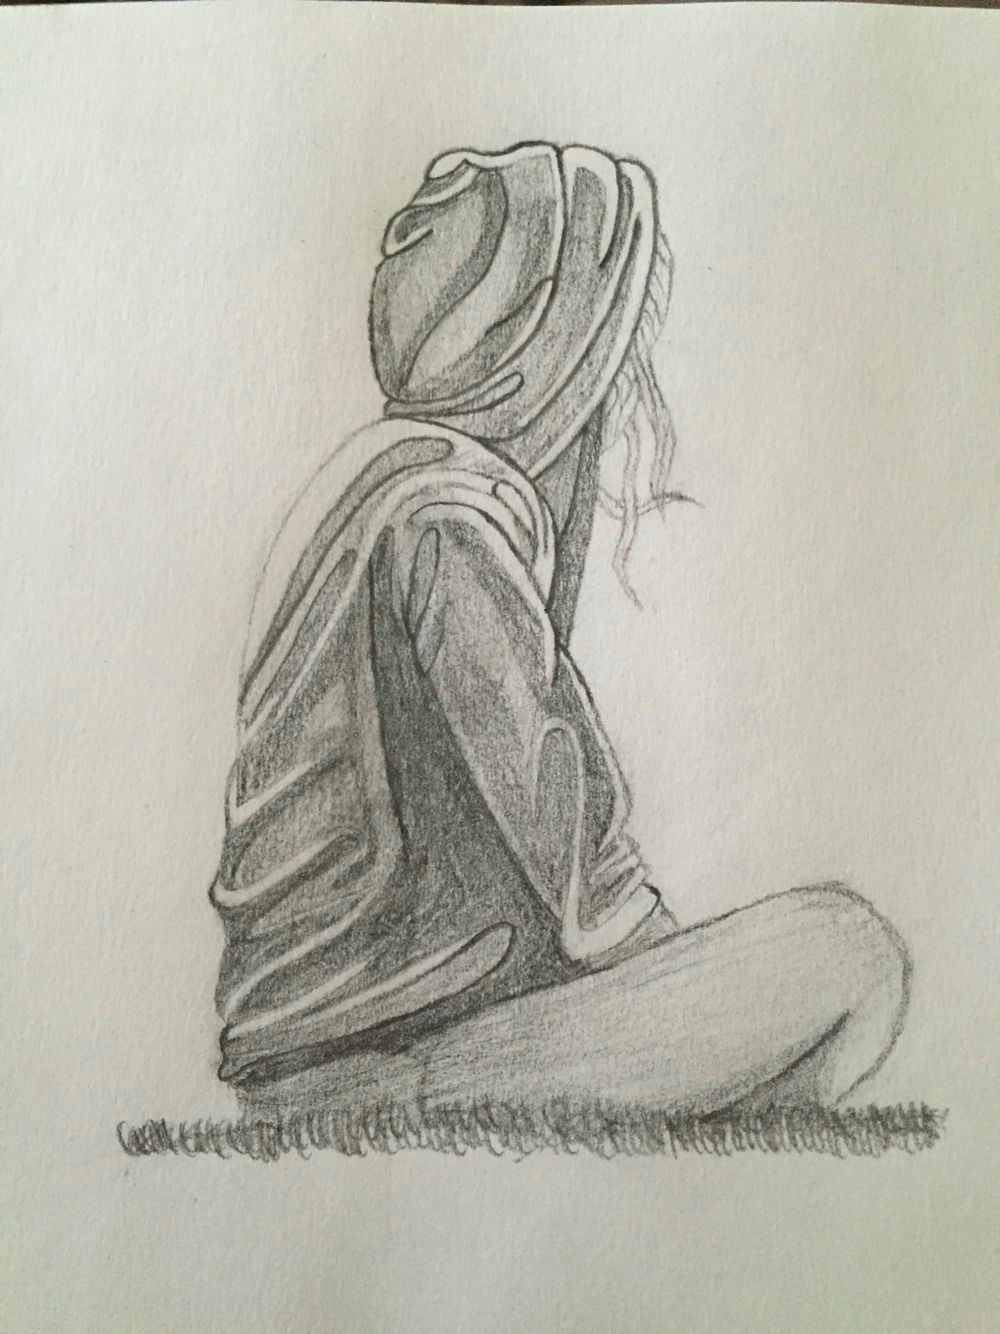 Drawings Of Girl Depressed Depression Sketch Depression Drawings Pencil Drawings Sketches